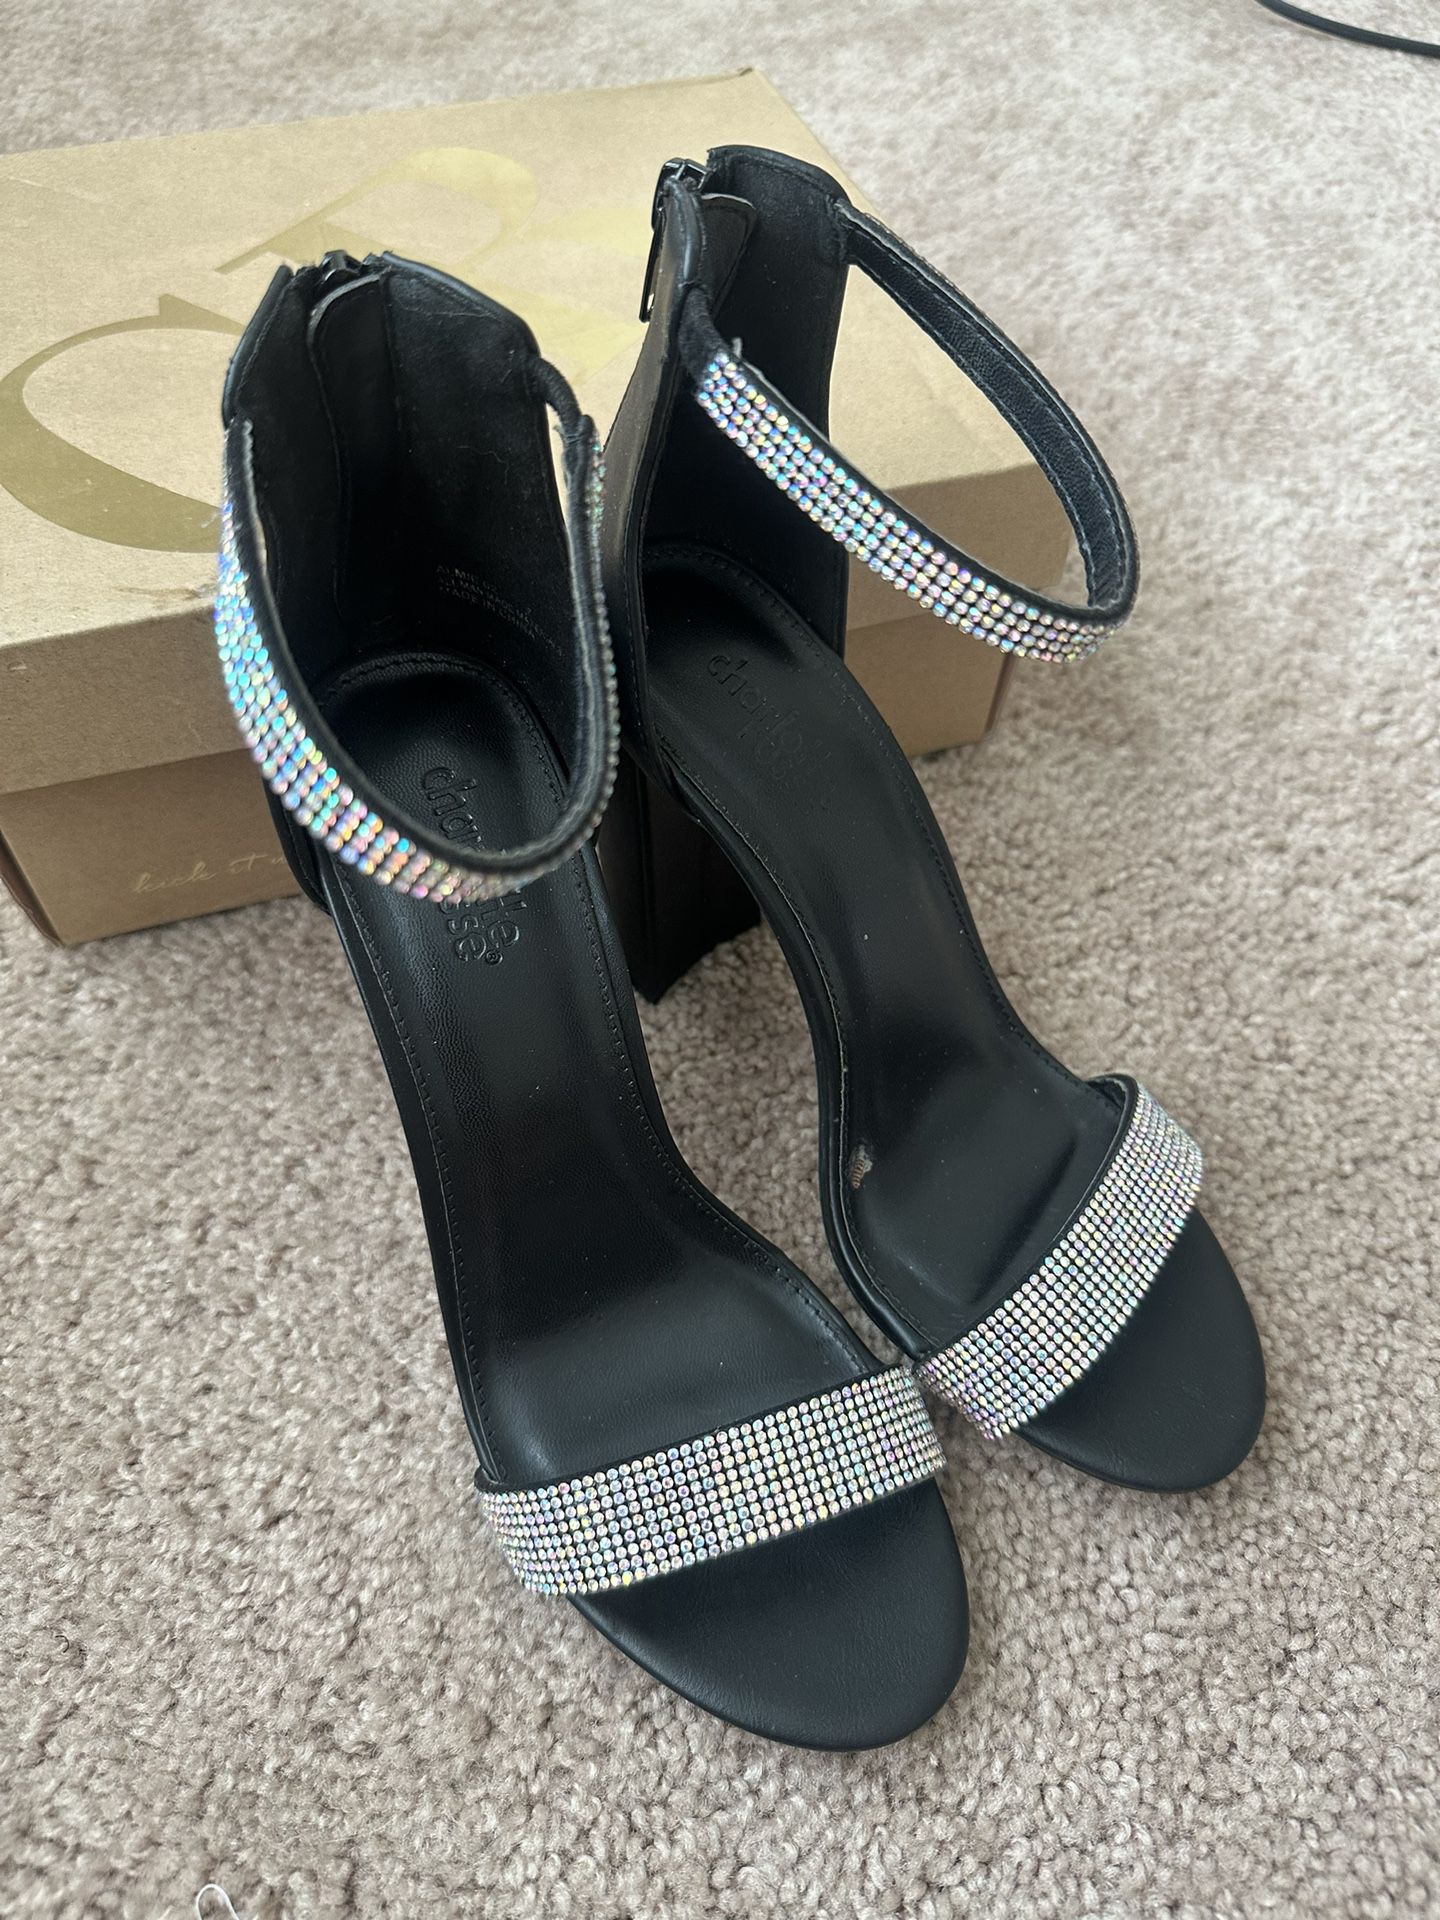 Charlotte Russe RHINESTONE Dress SANDALS Ankle STRAP, 4” Heel, Silver/Black 7M